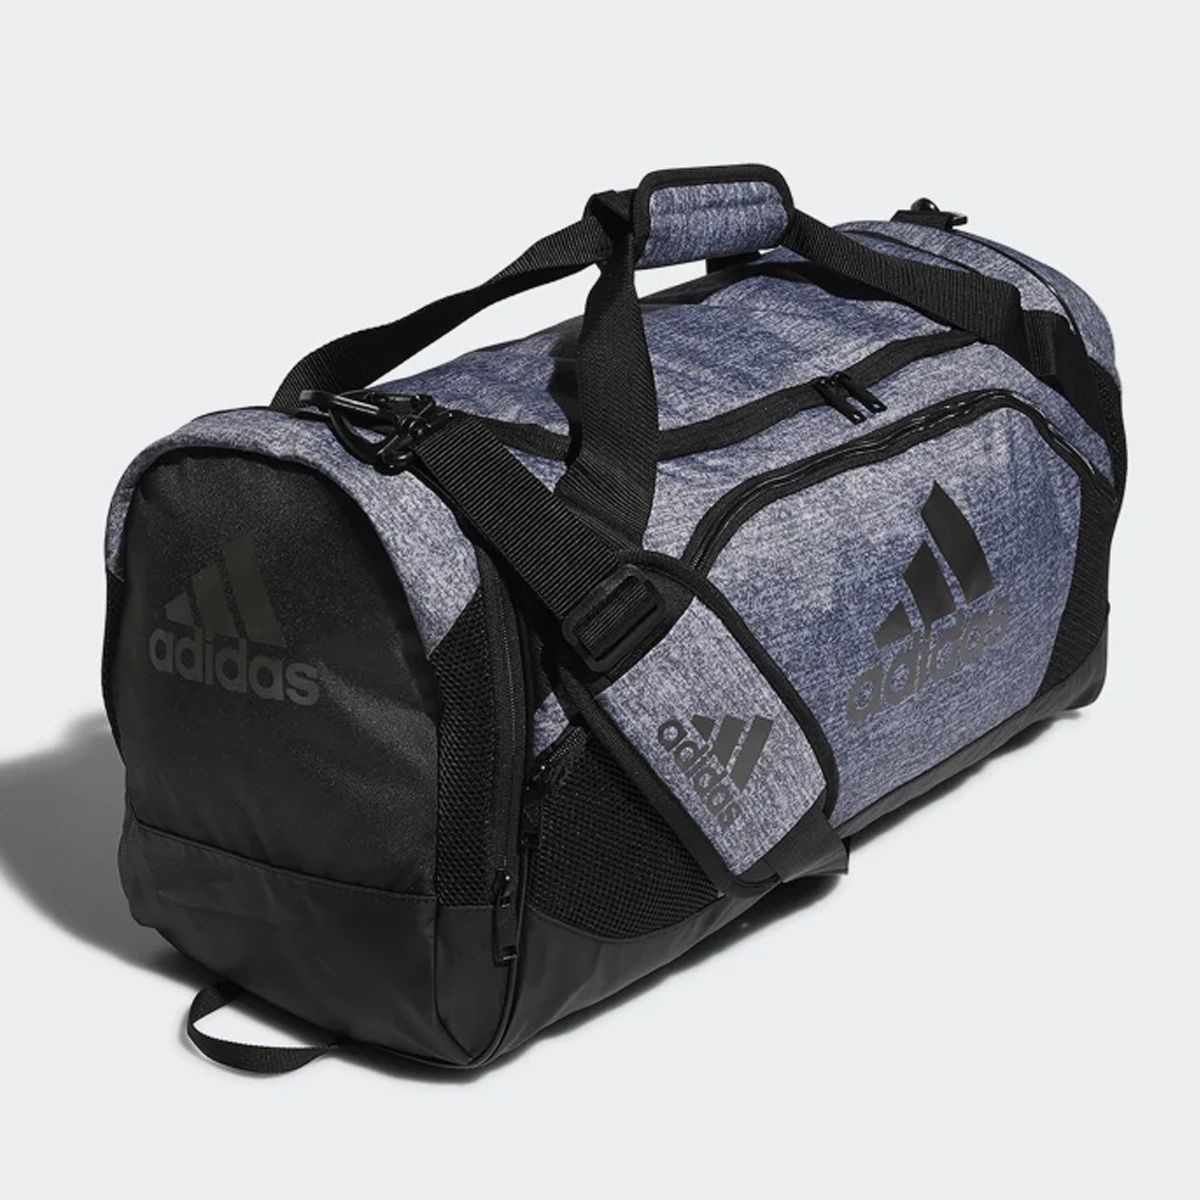 adidas travel bag price